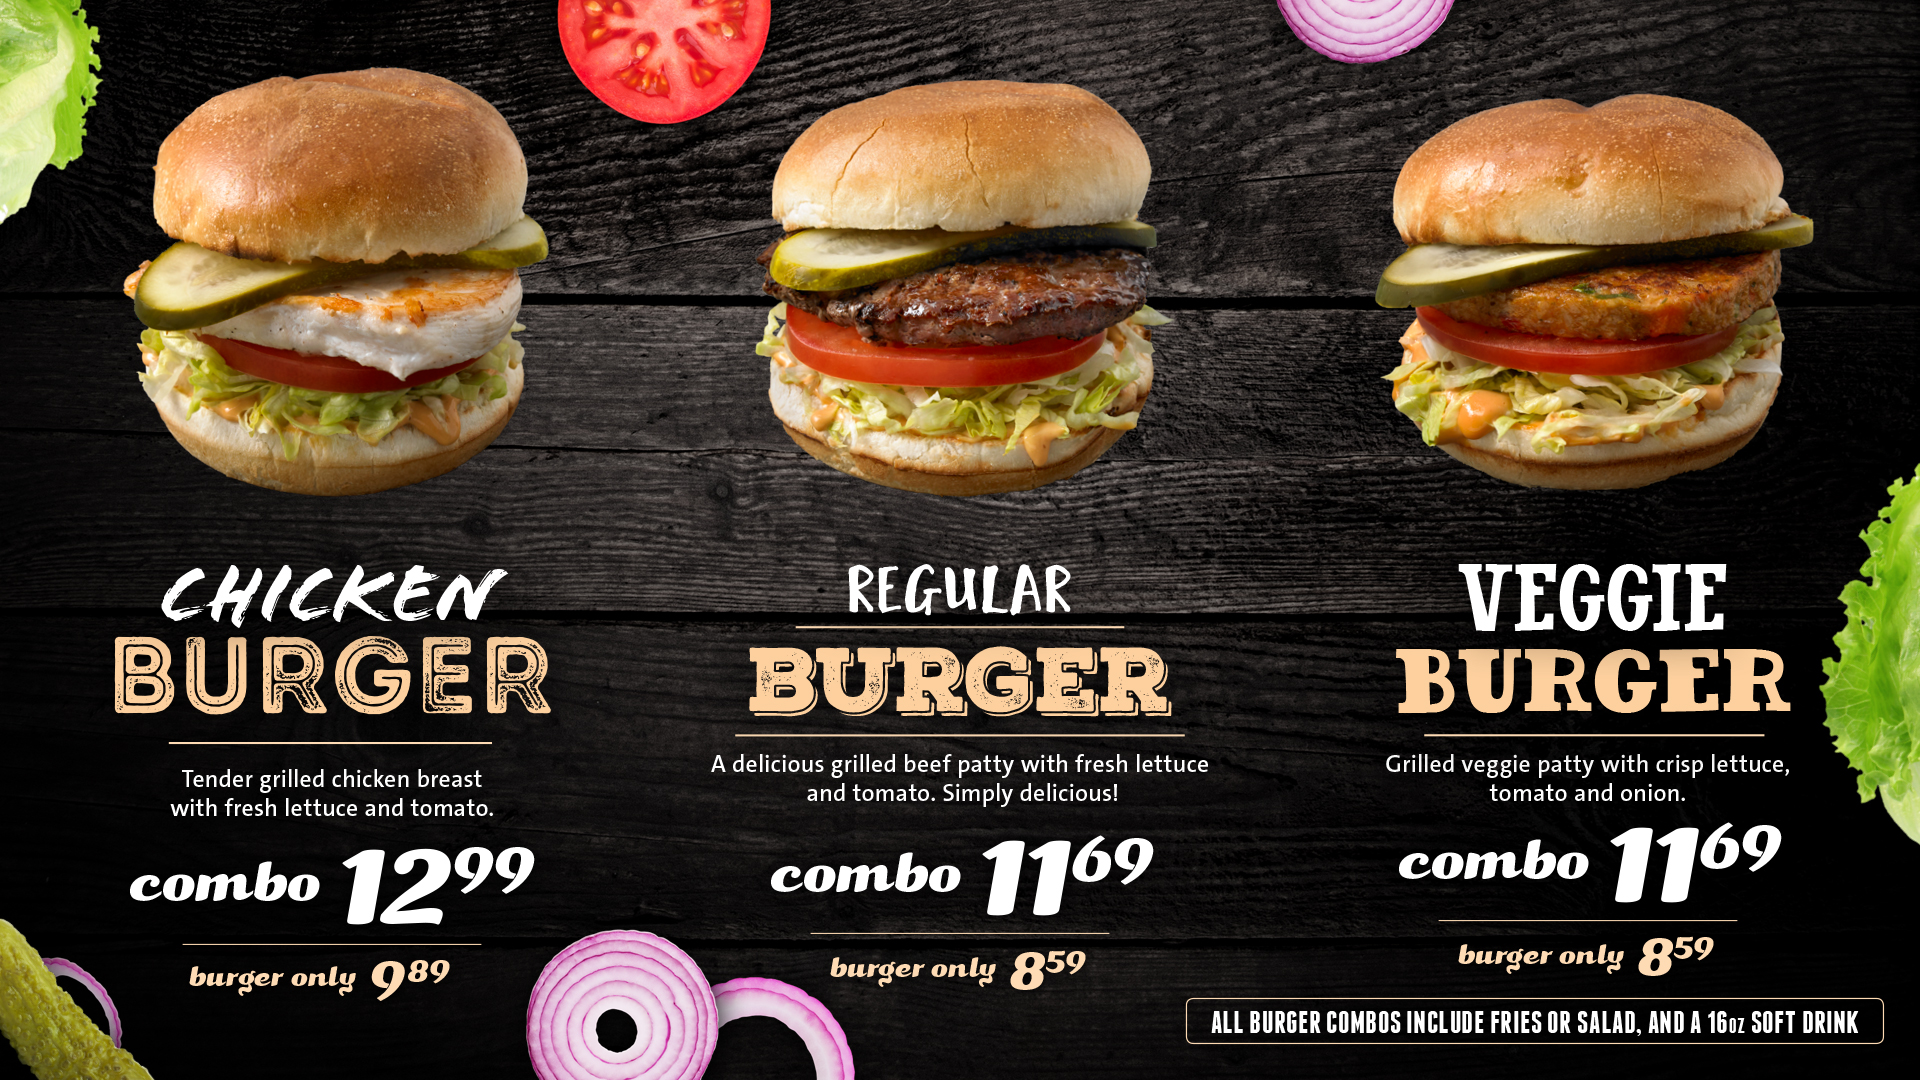 2020-Common-PM-1920×1080-Burgers-101